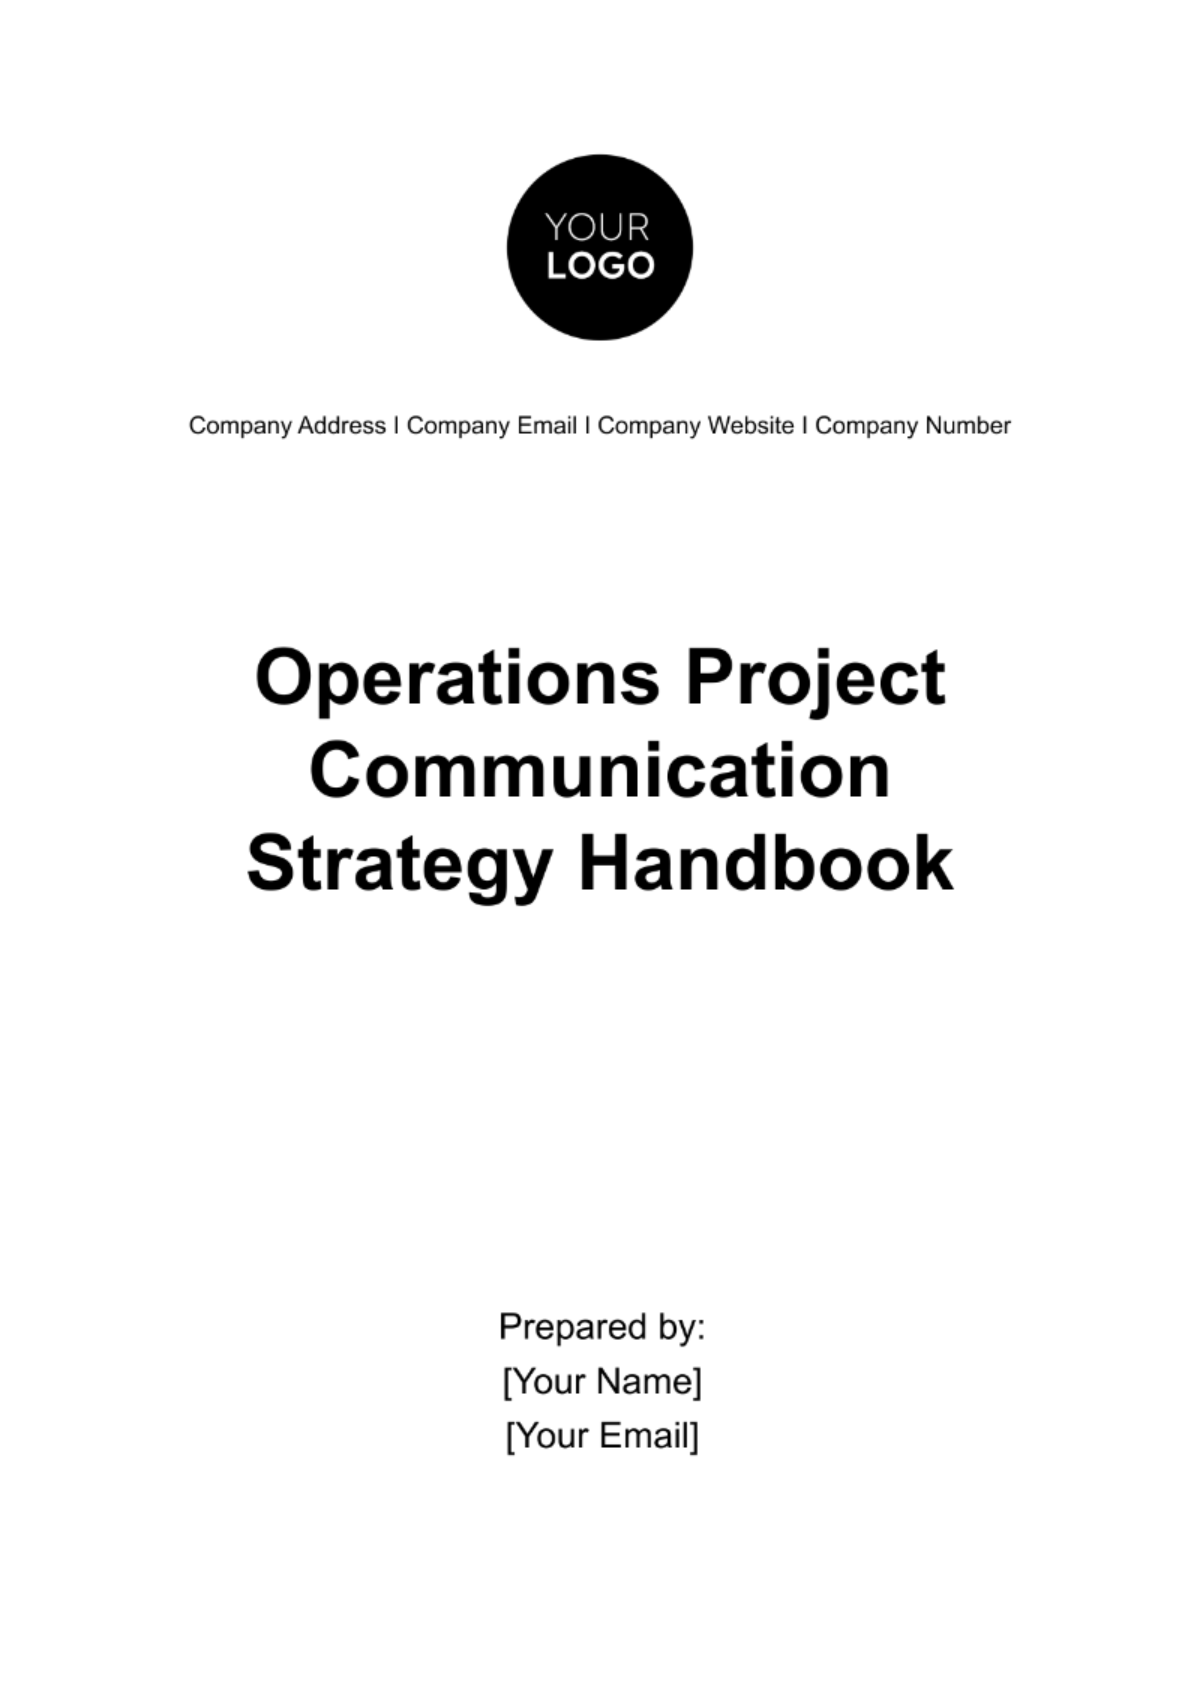 Operations Project Communication Strategy Handbook Template